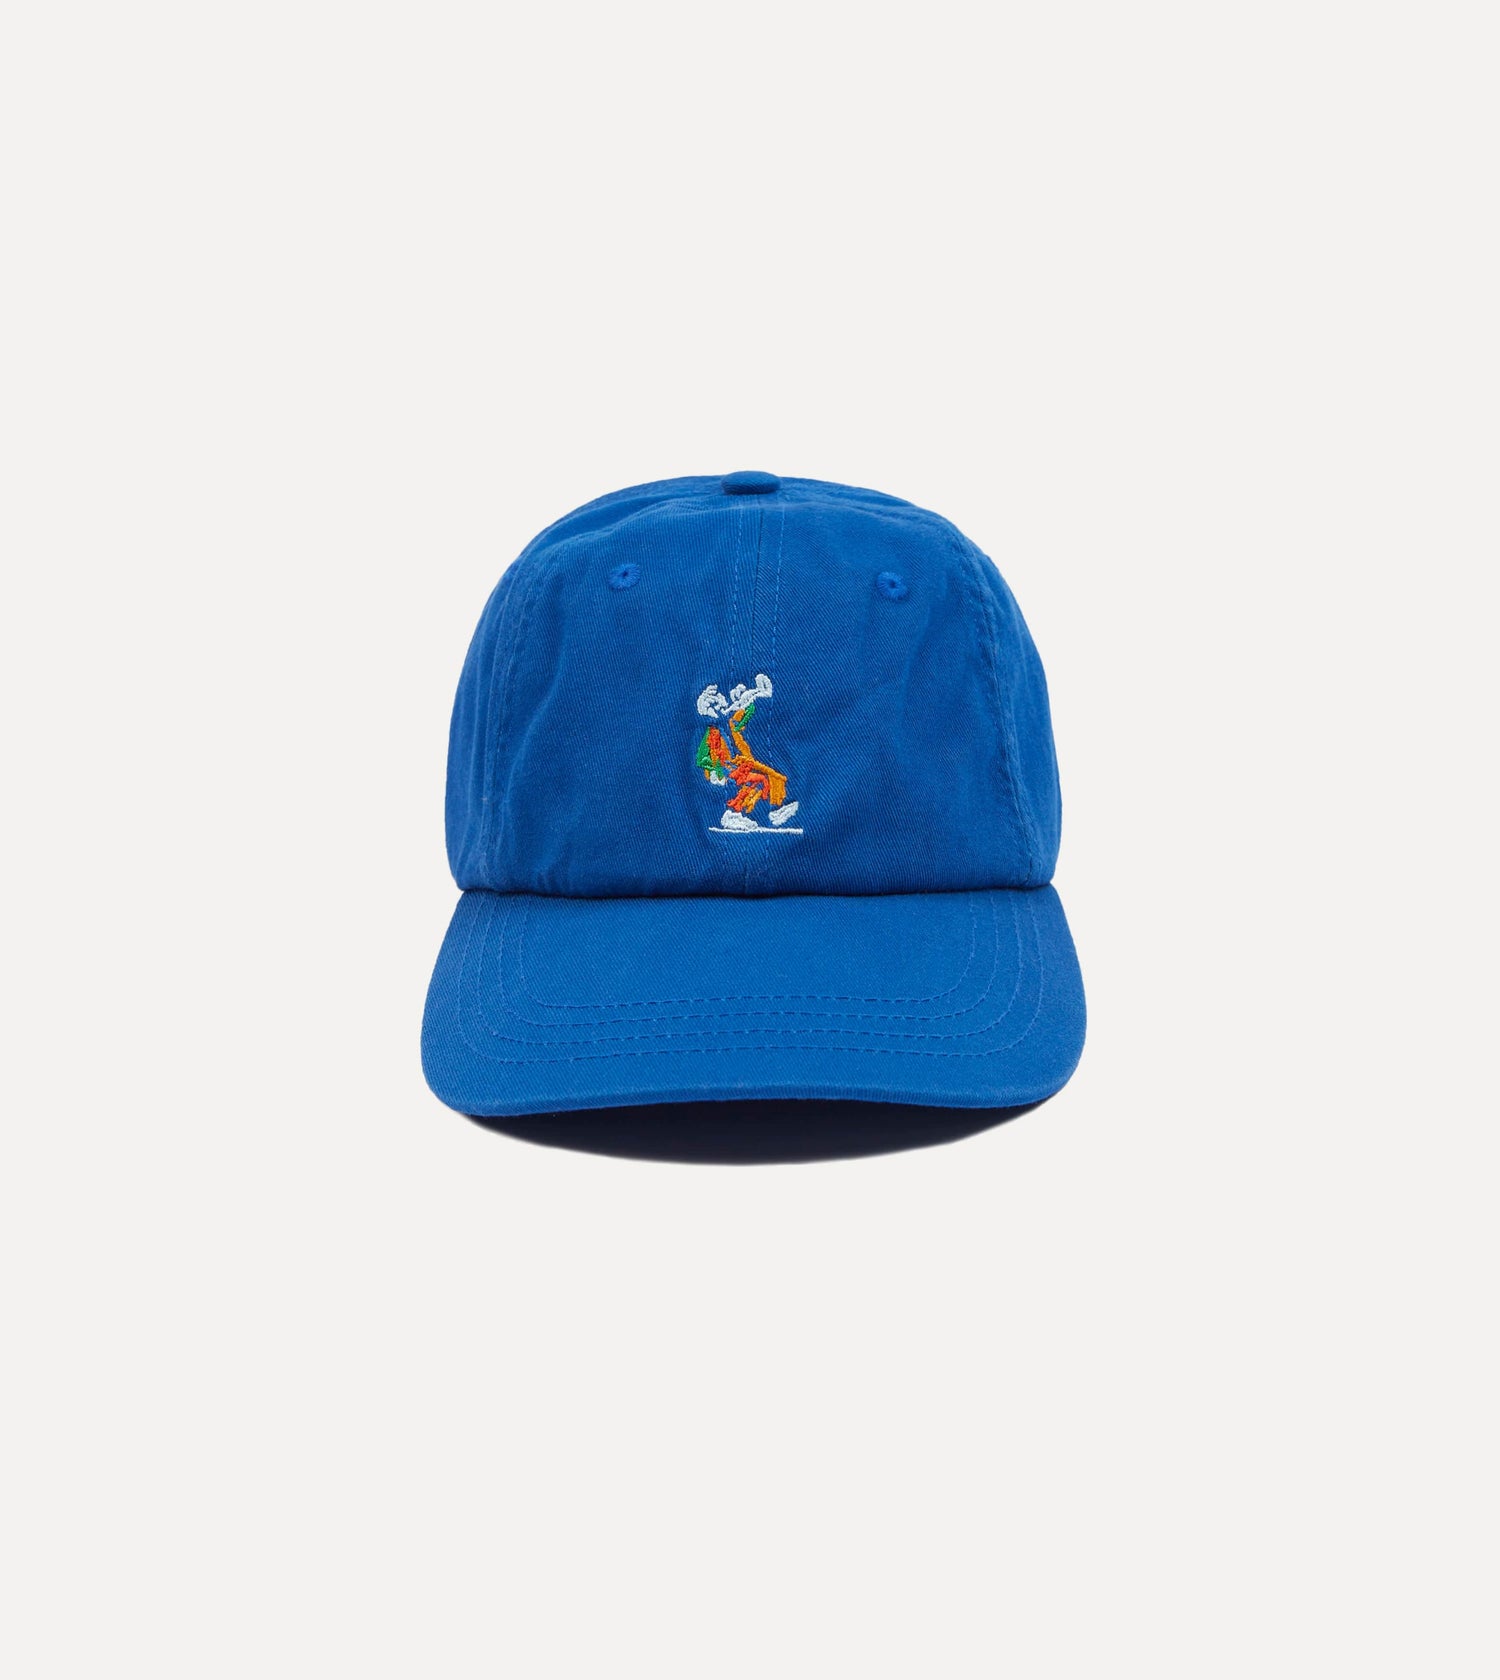 ALD / Drake's Blue Chino Hat